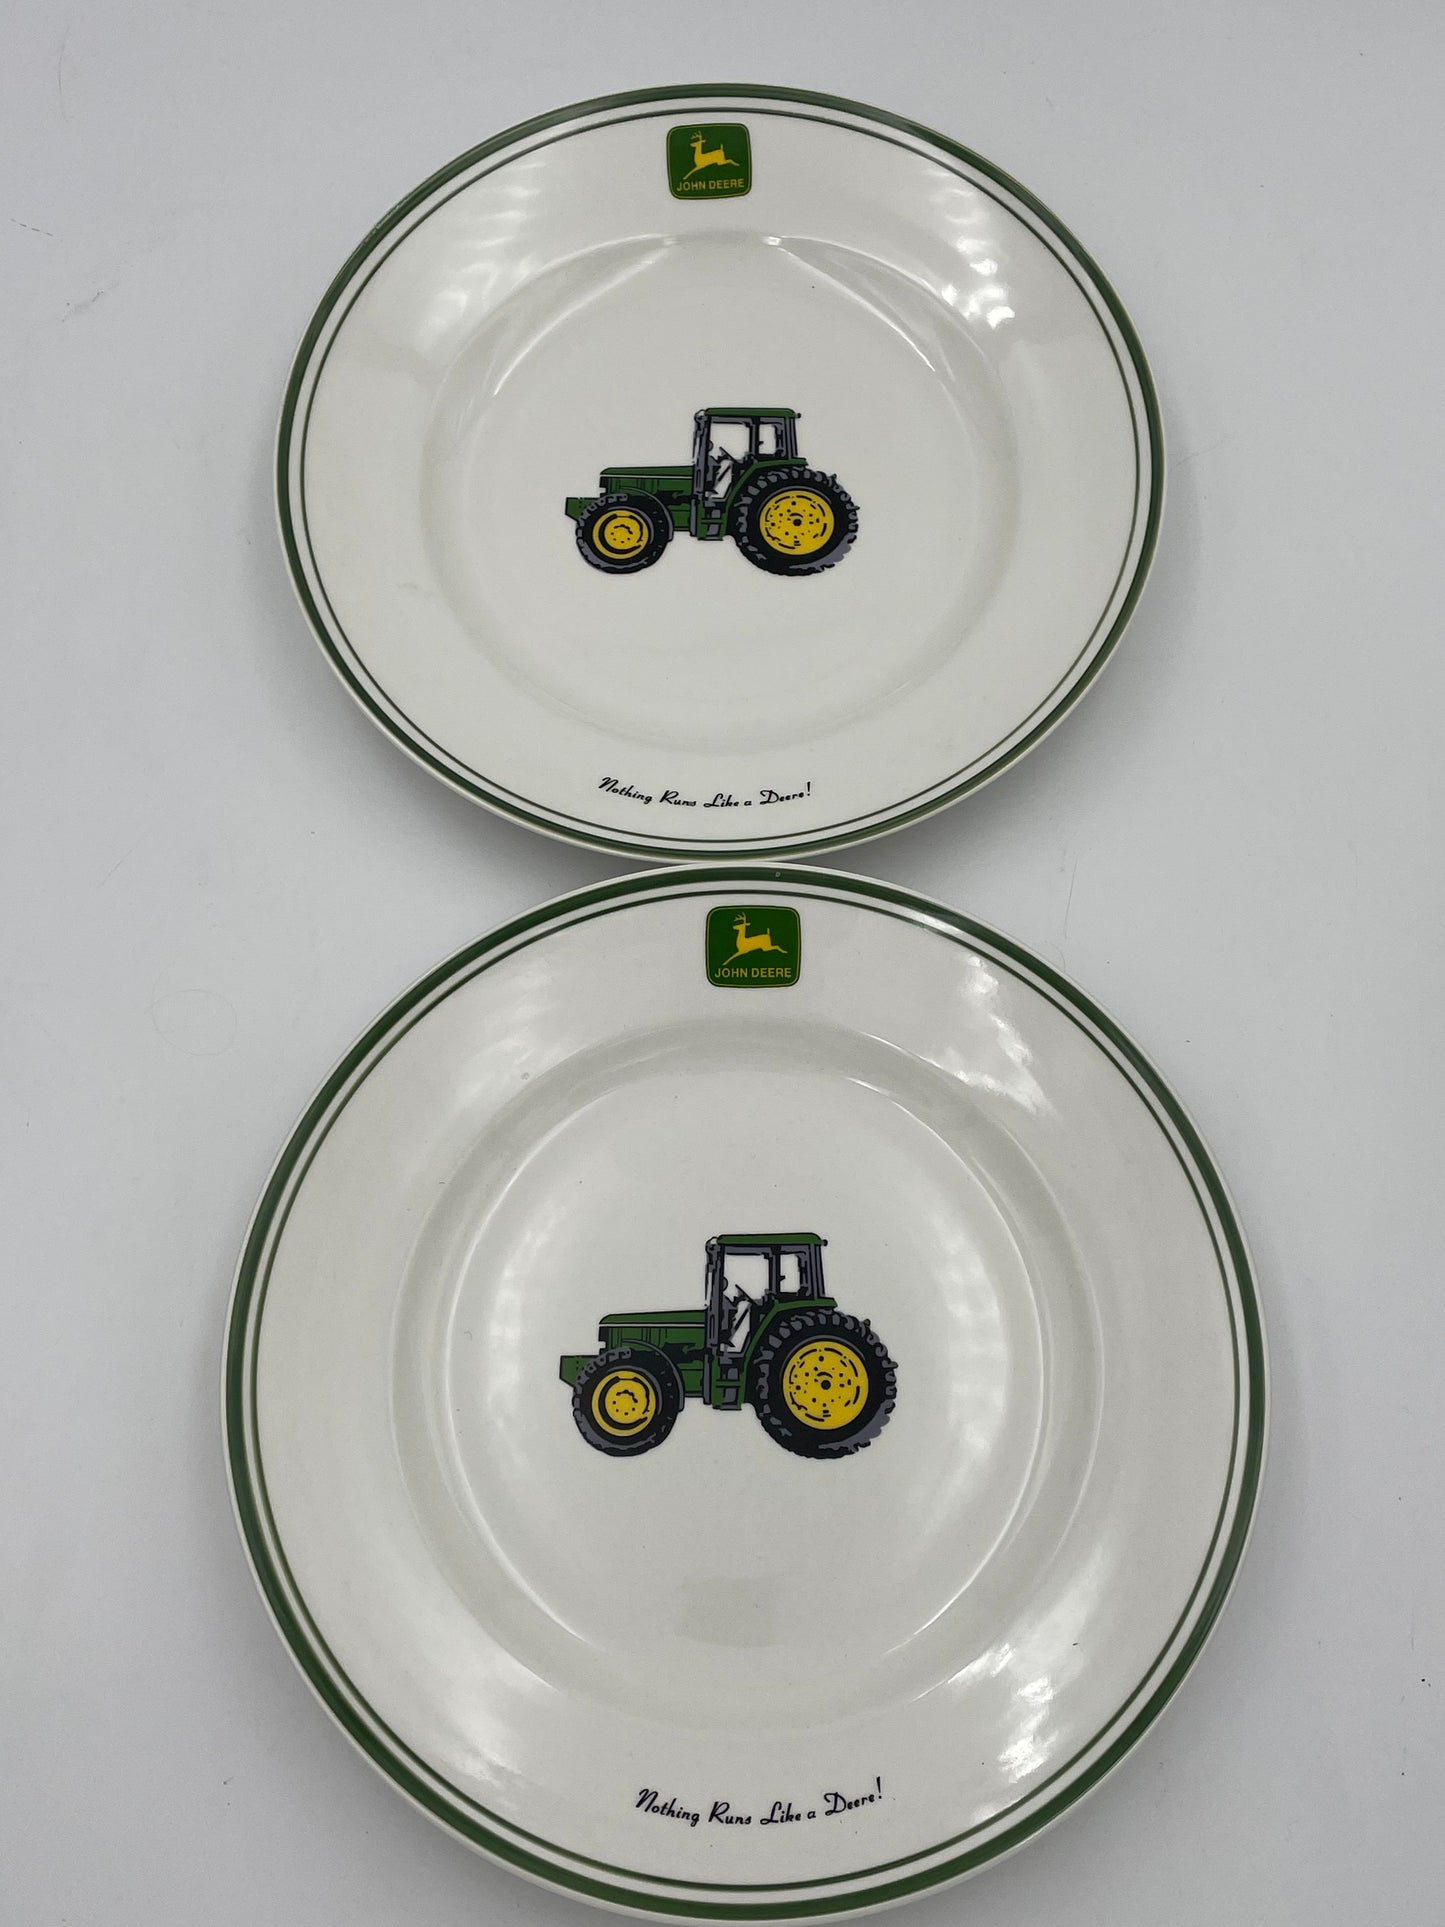 Collectible - John Deere Plates - Set of 2